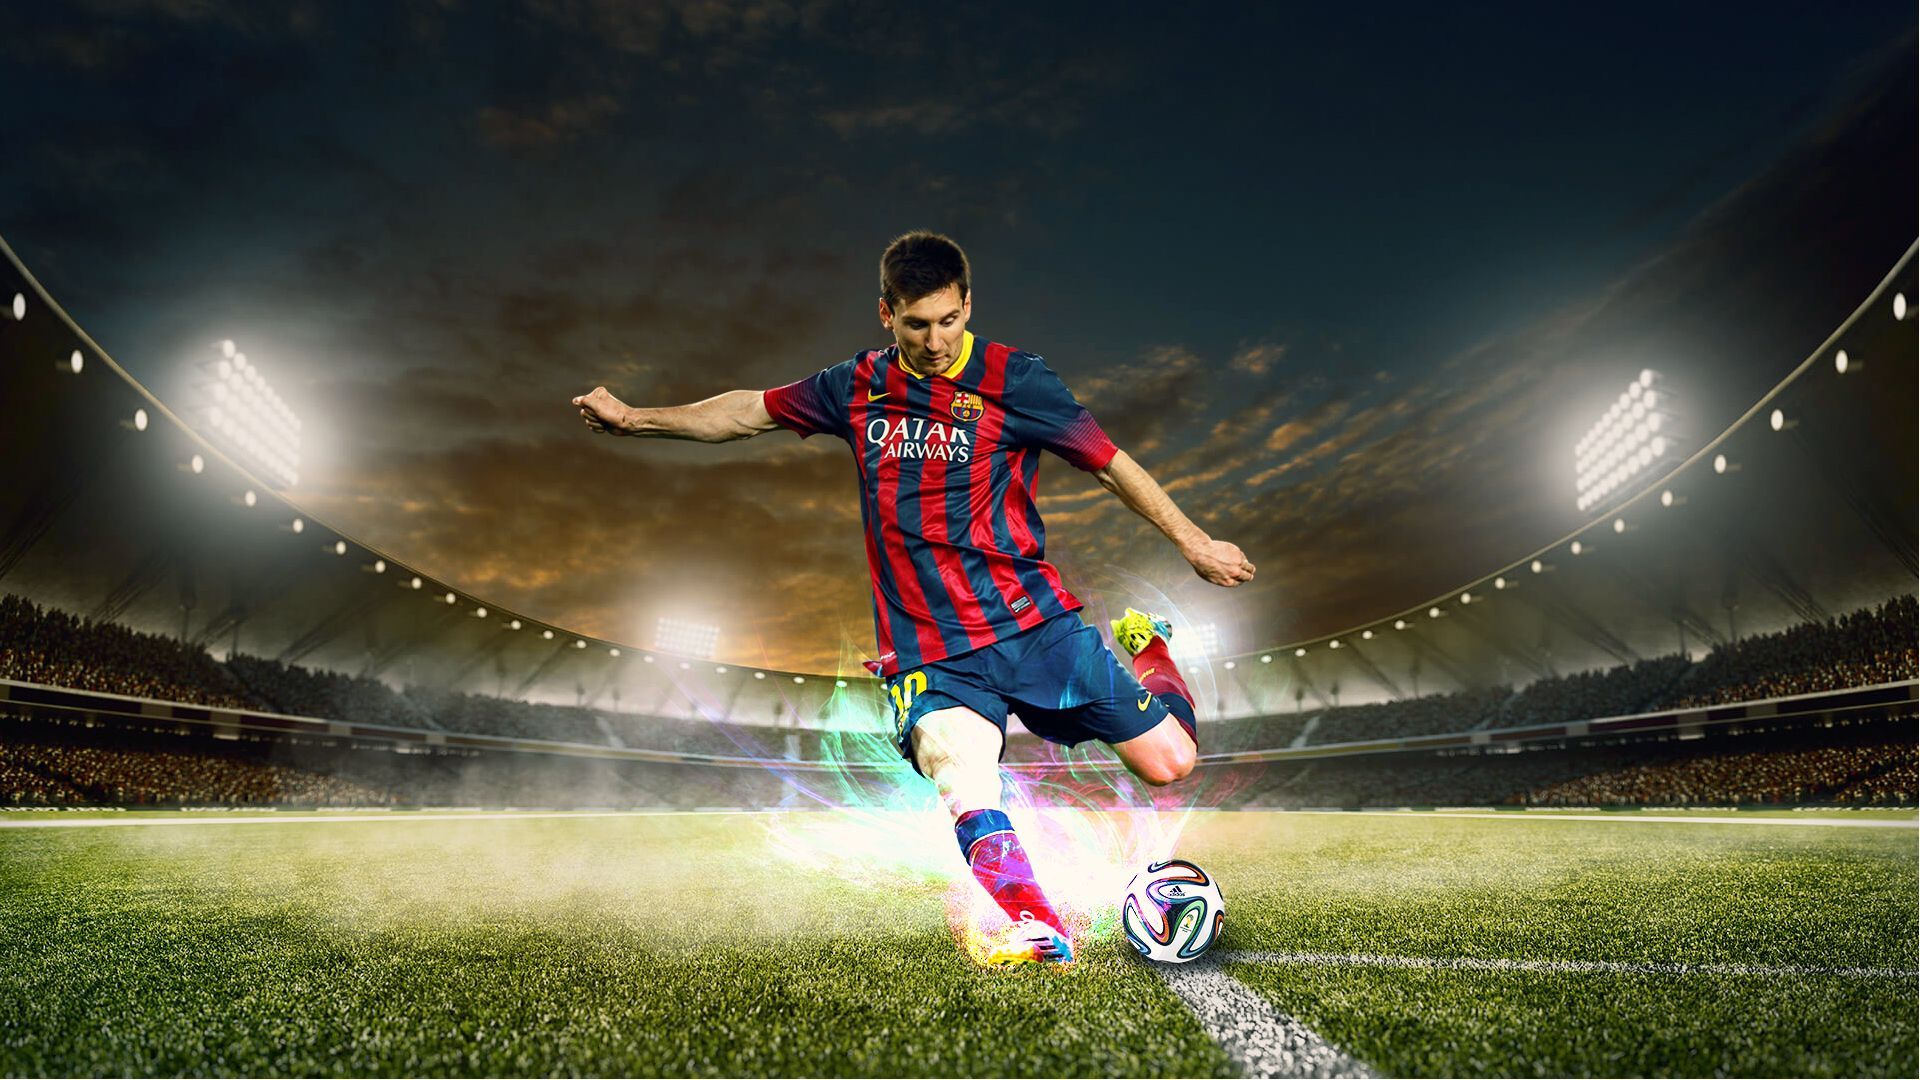 Football Background Images  Free Download on Freepik